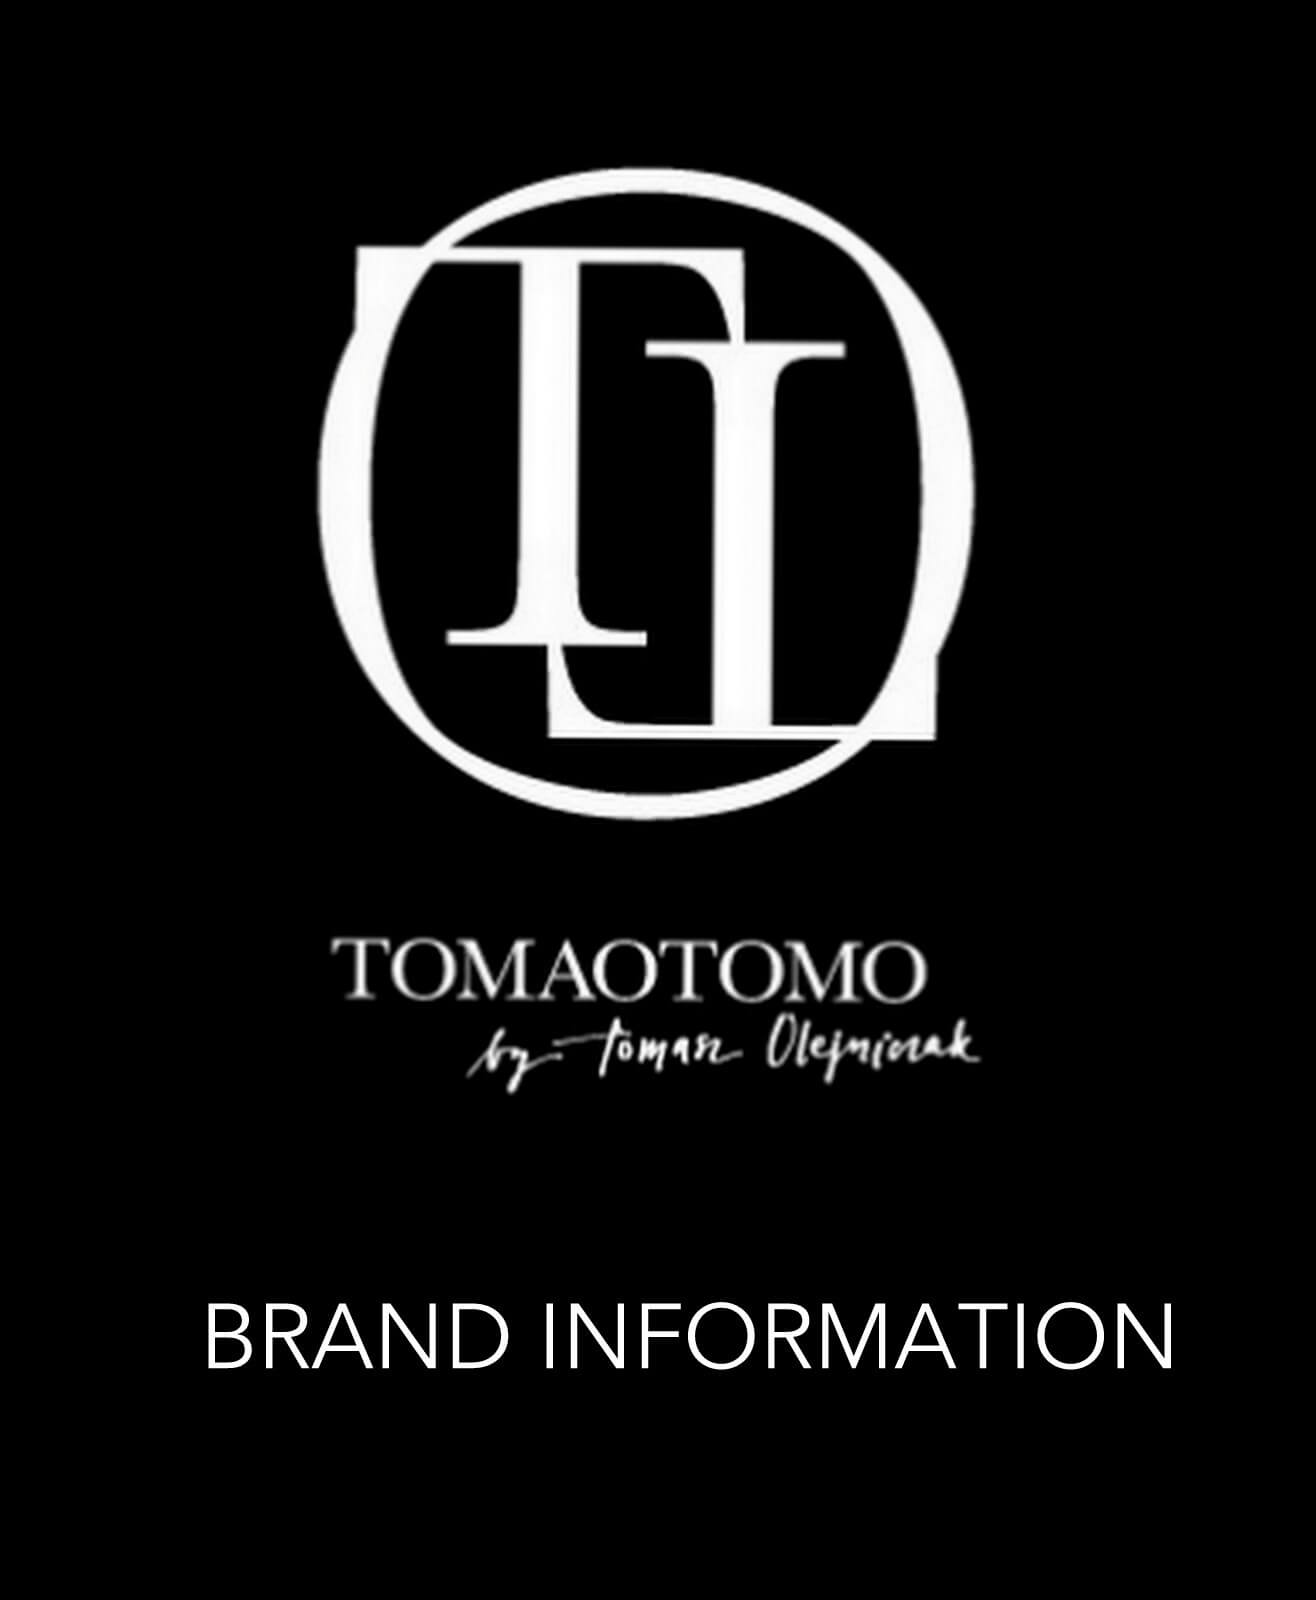 Brand information